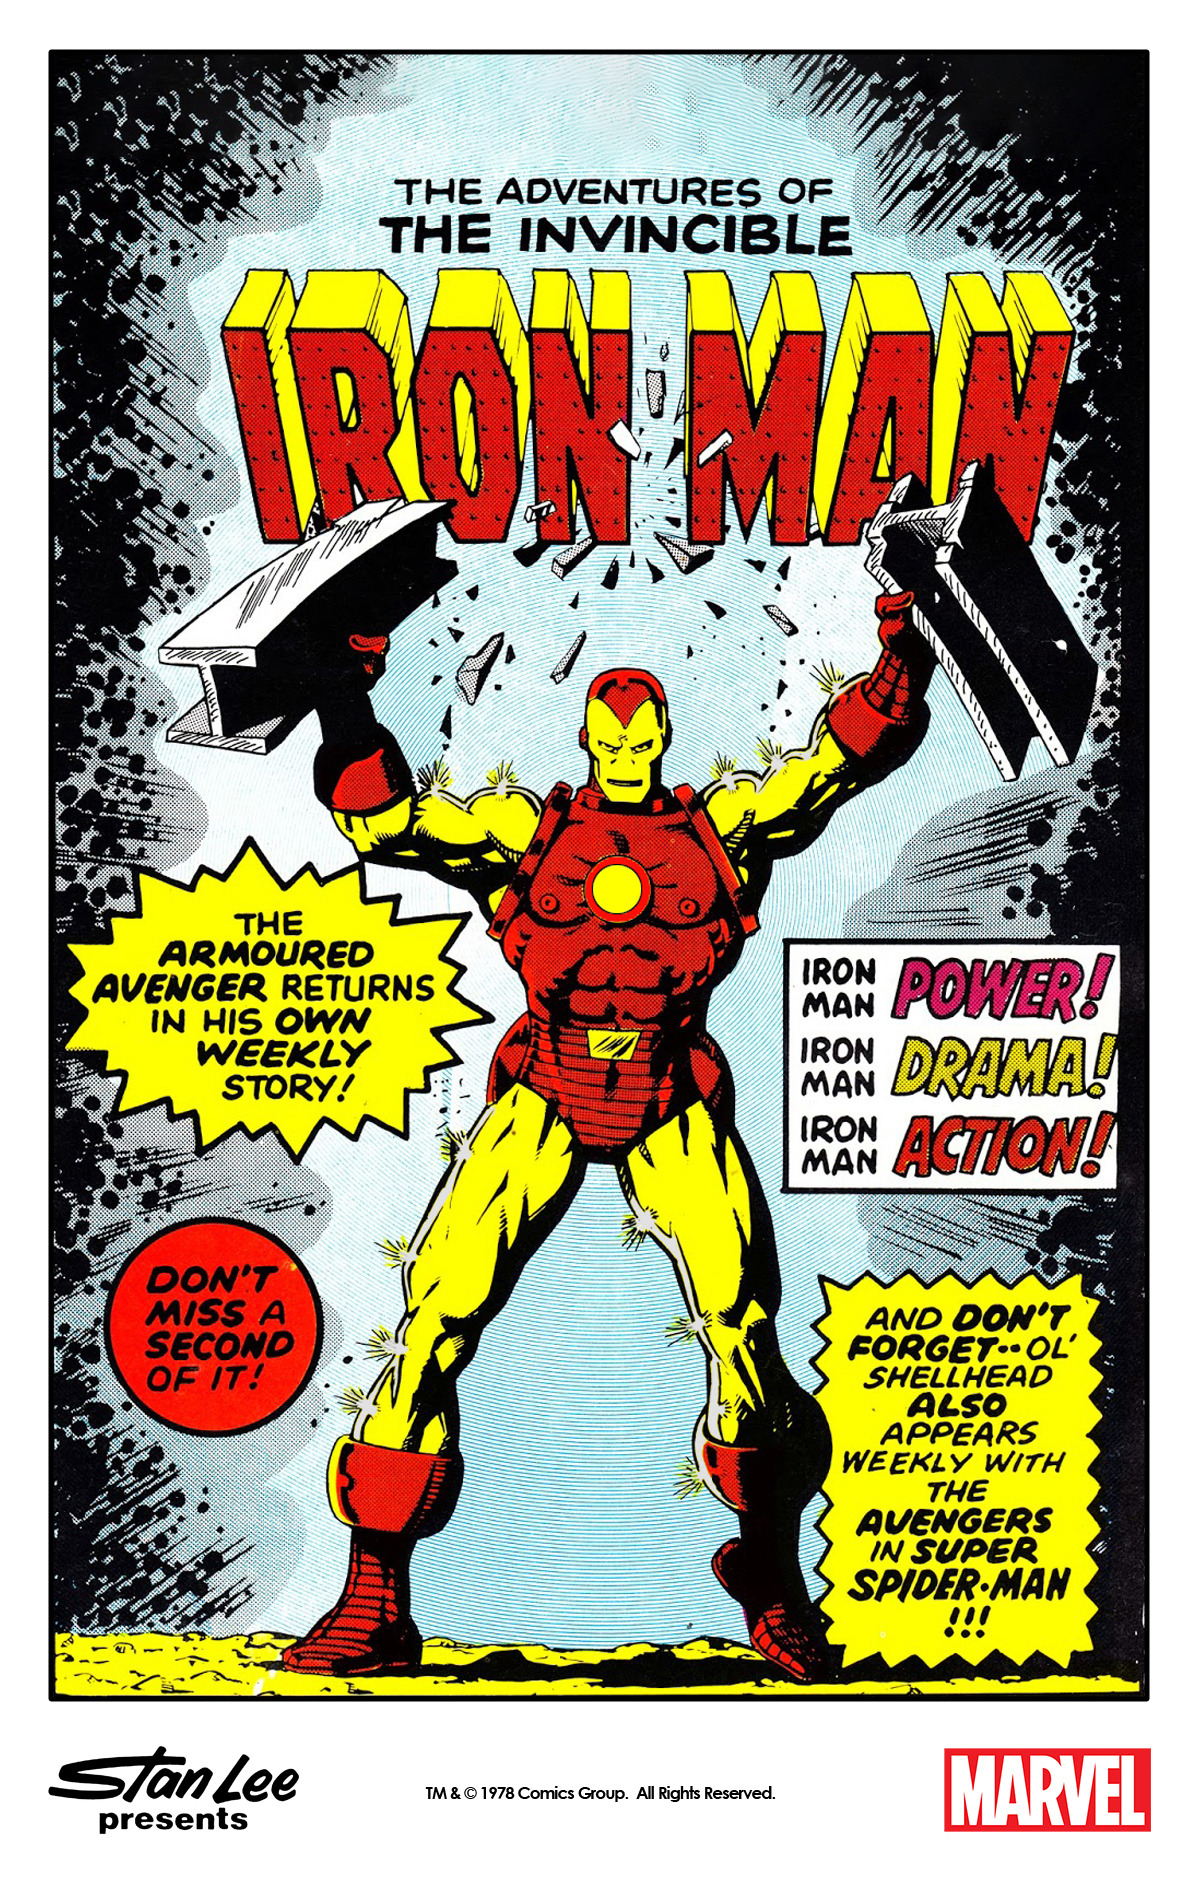 Man 1978 iron